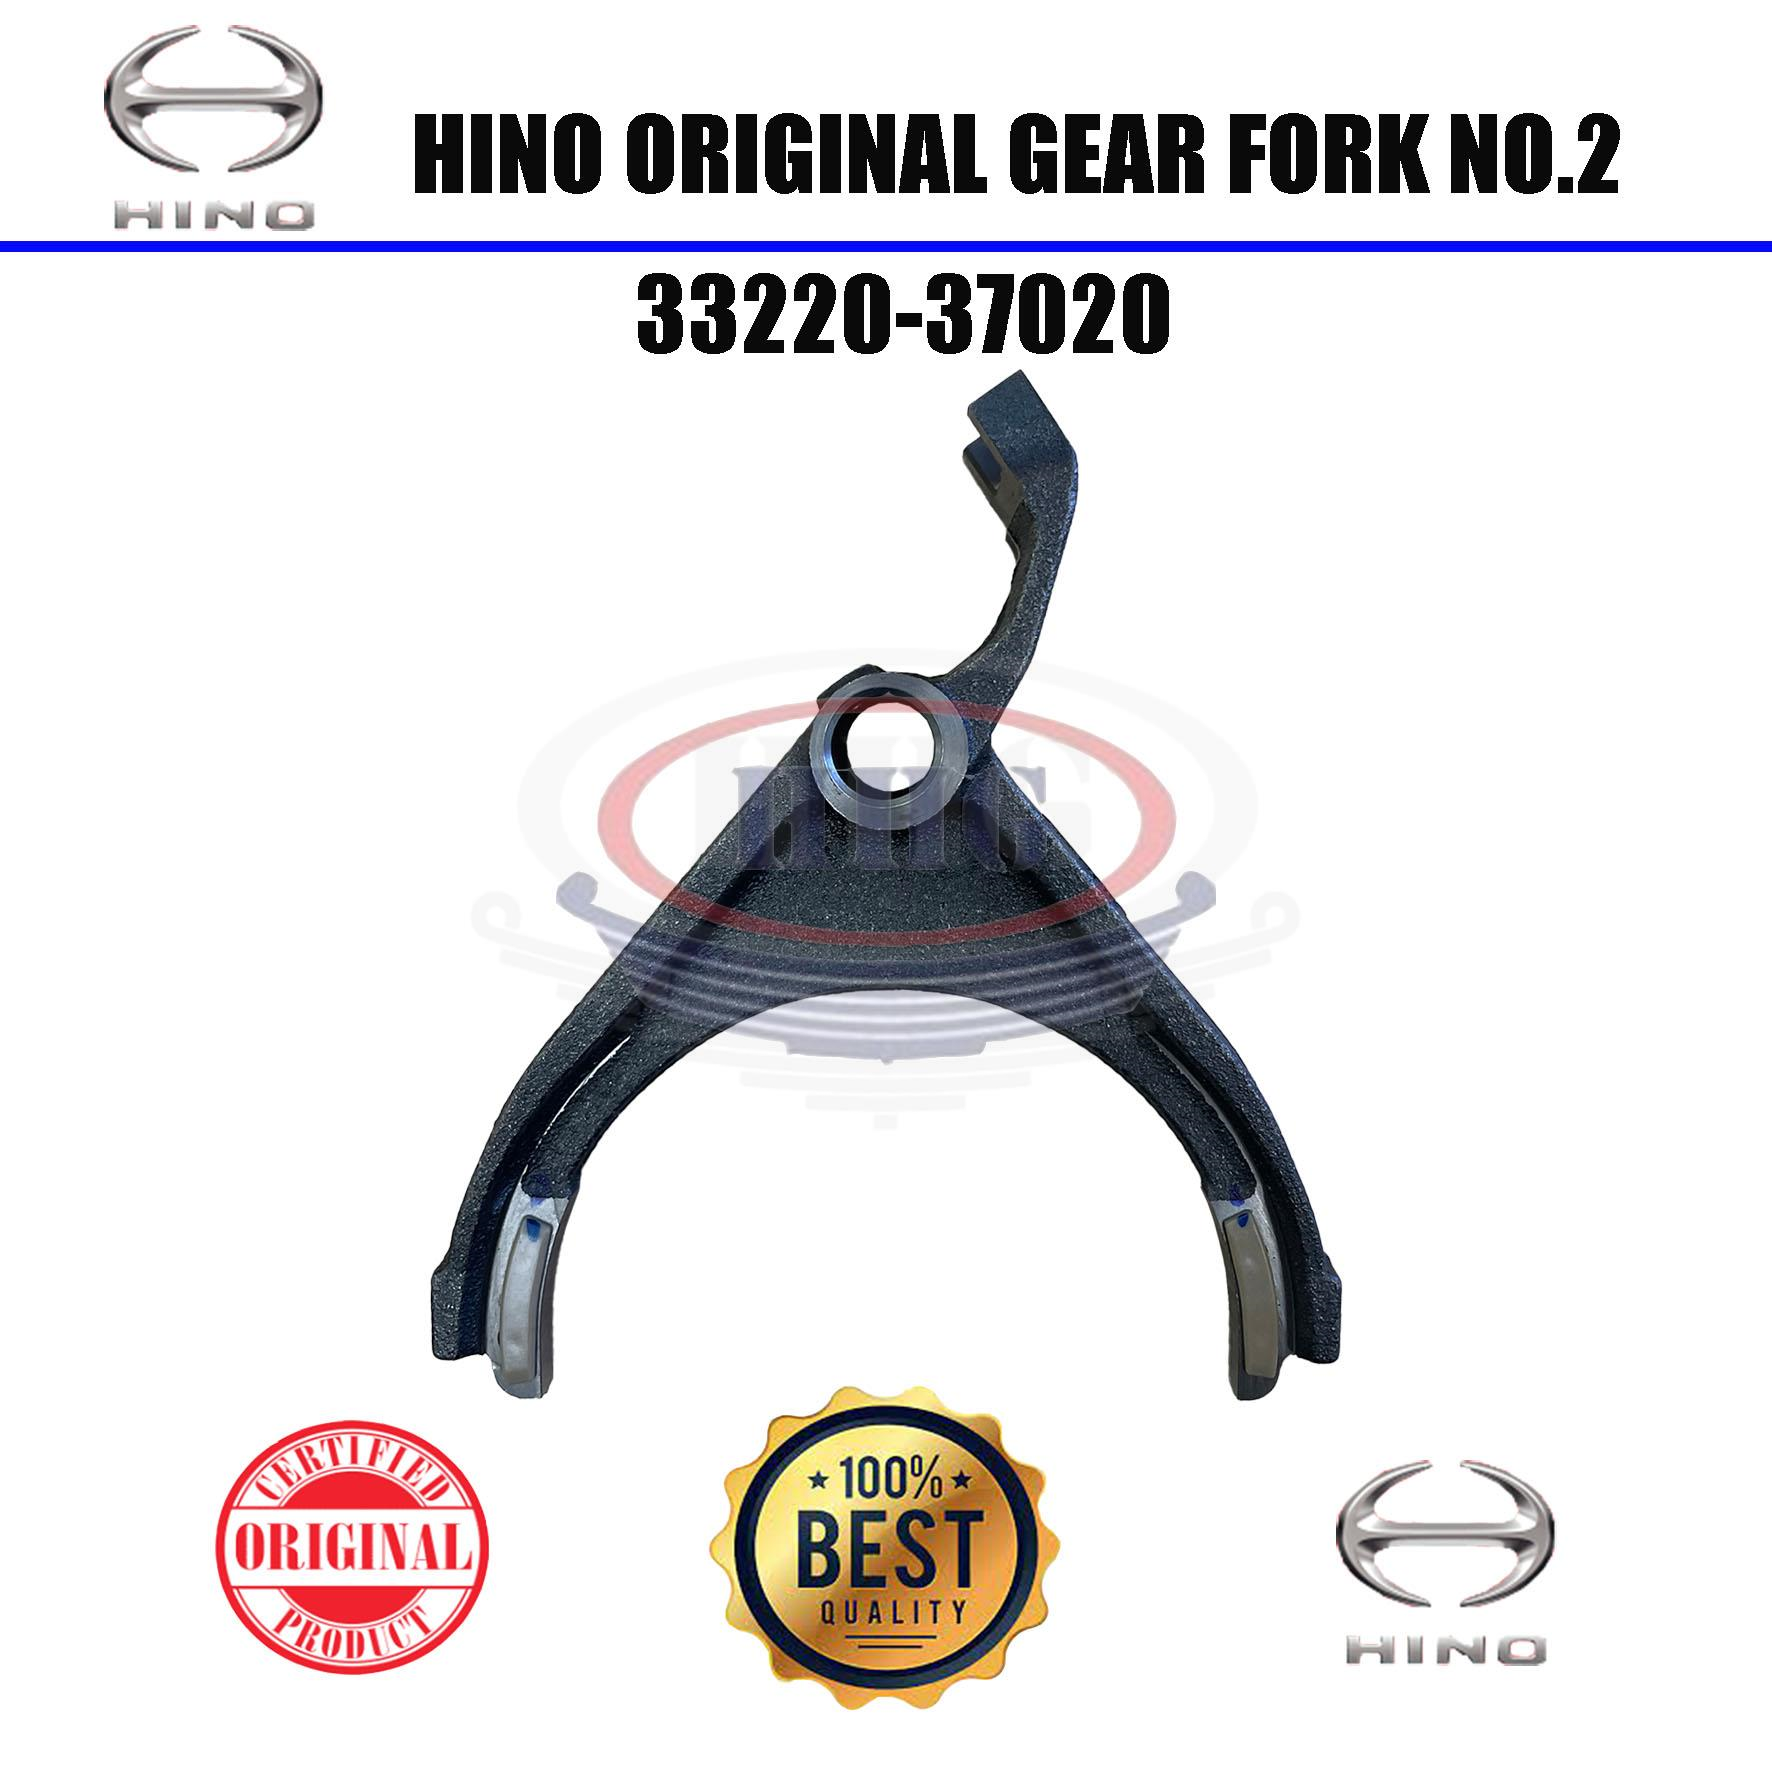 Hino Original WU720 Gear Fork No.2 (33220-37020)